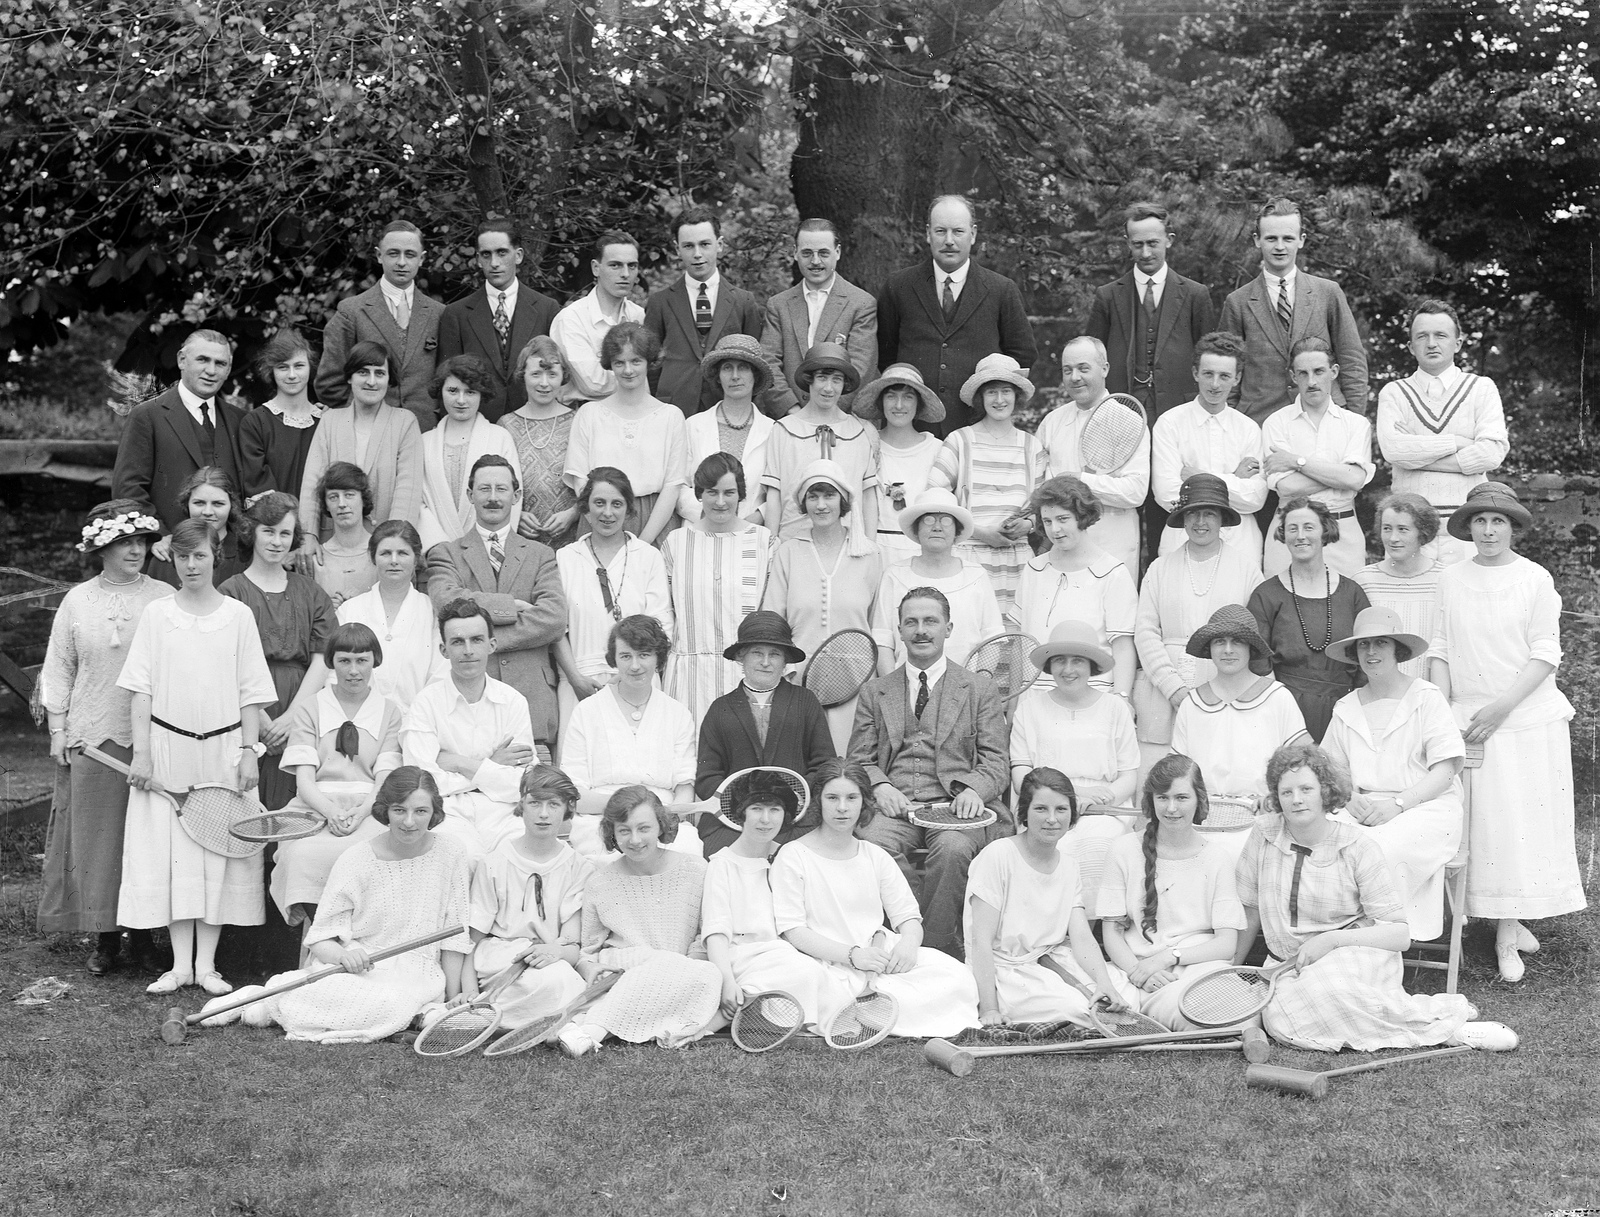 St. Anne's Union Lawn Tennis Club, Waterford, Ireland, 1924